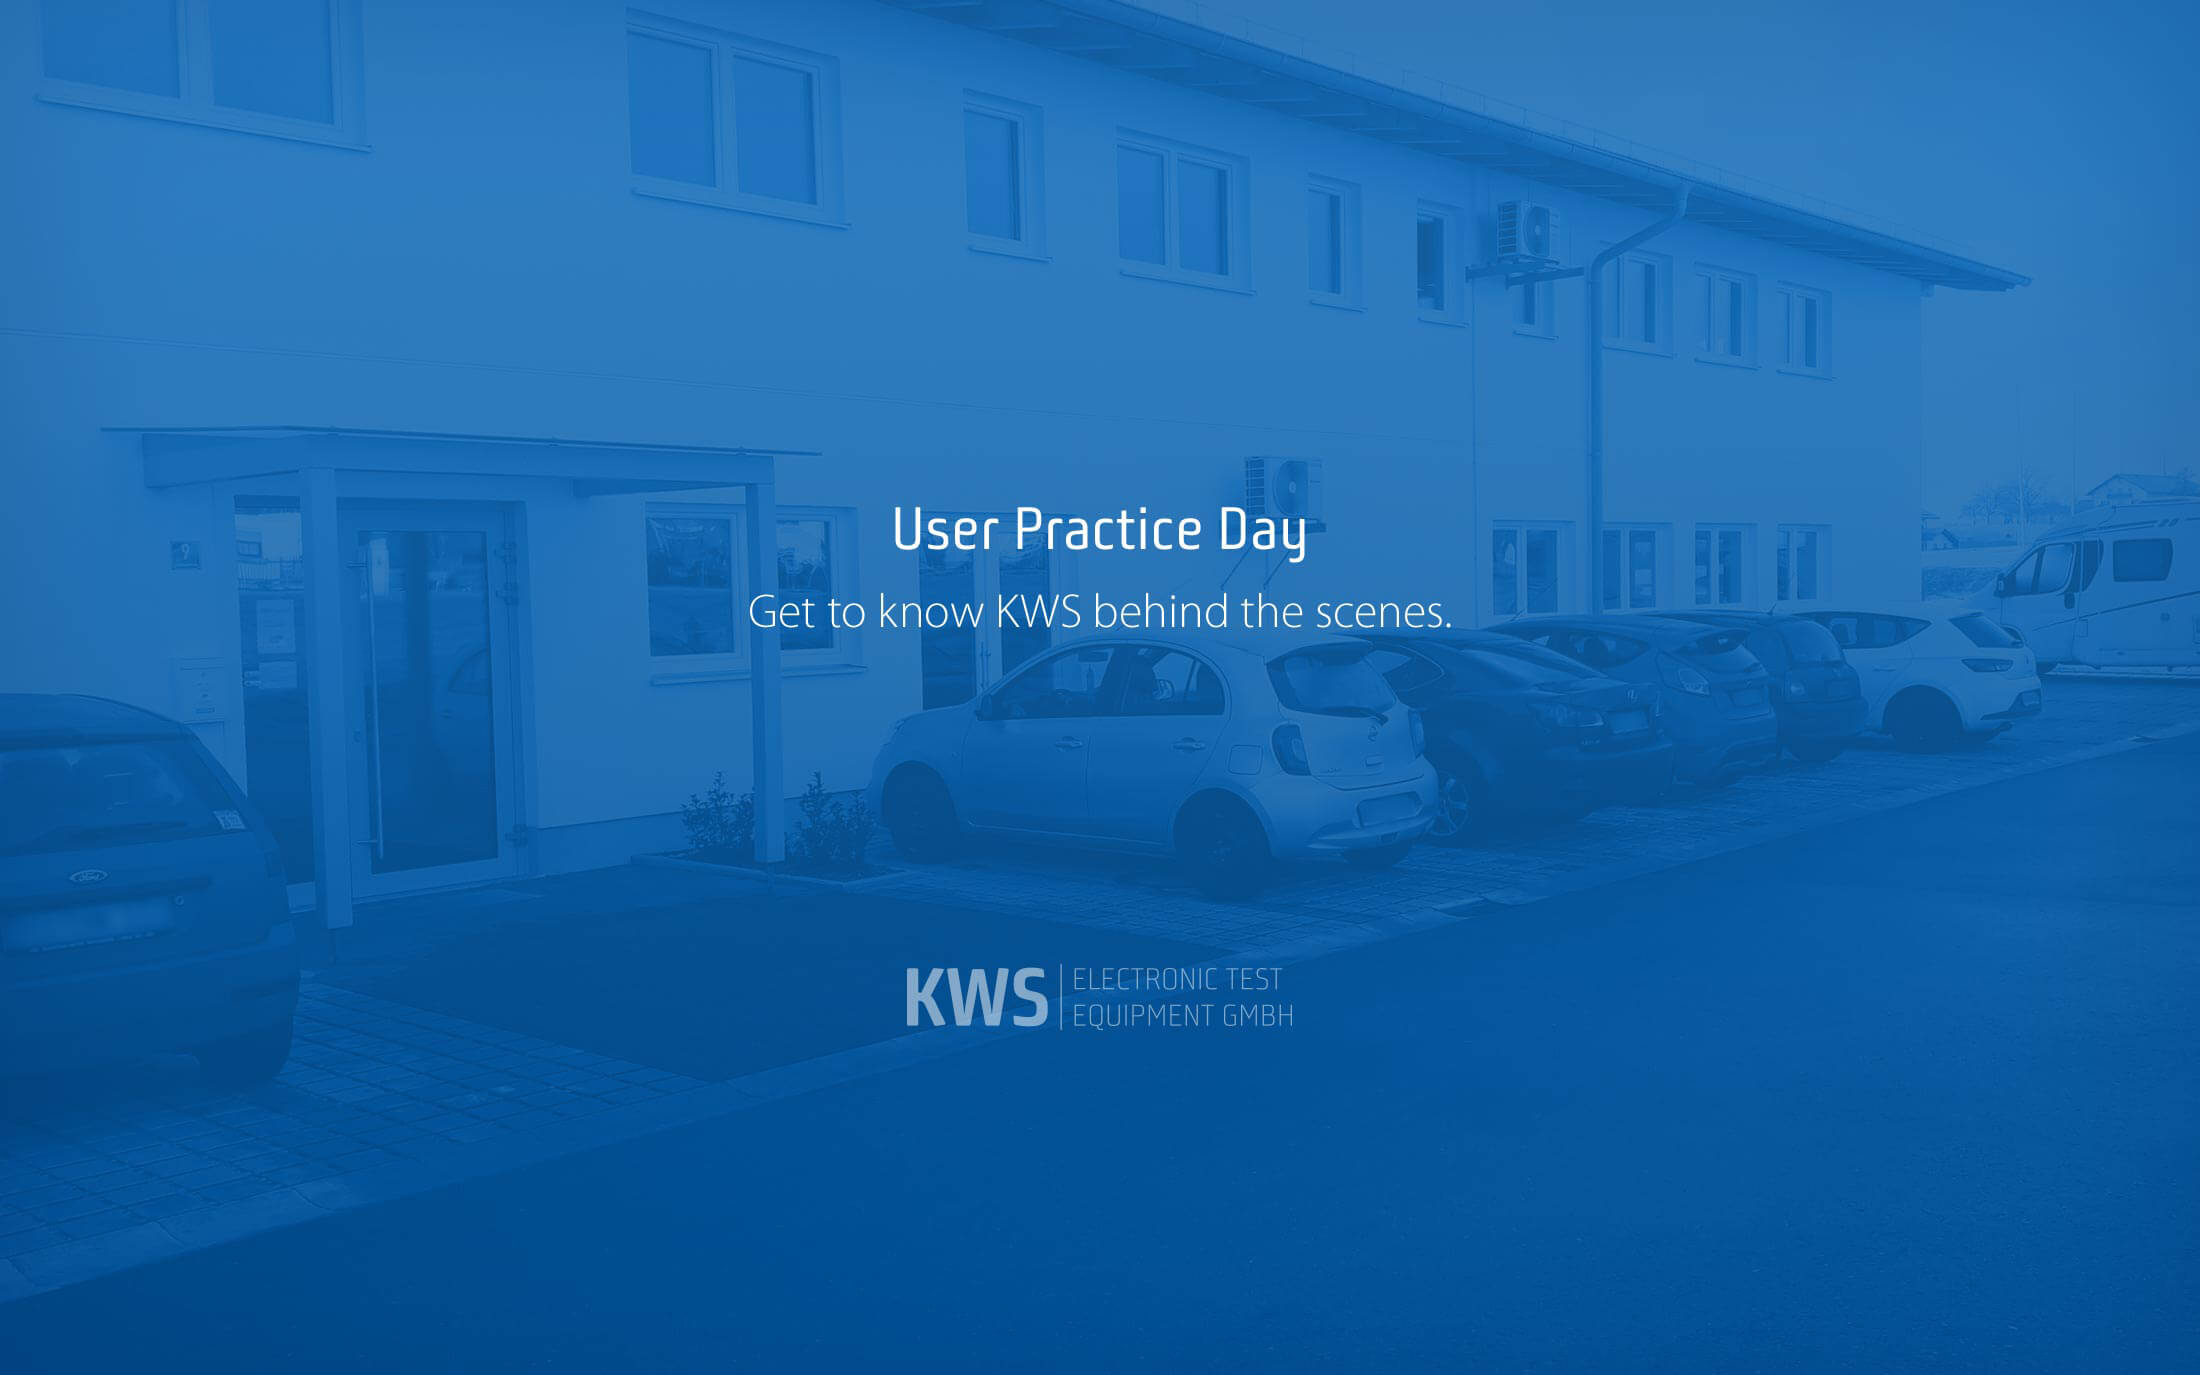 KWS Electronic News 2020: User practice day at KWS